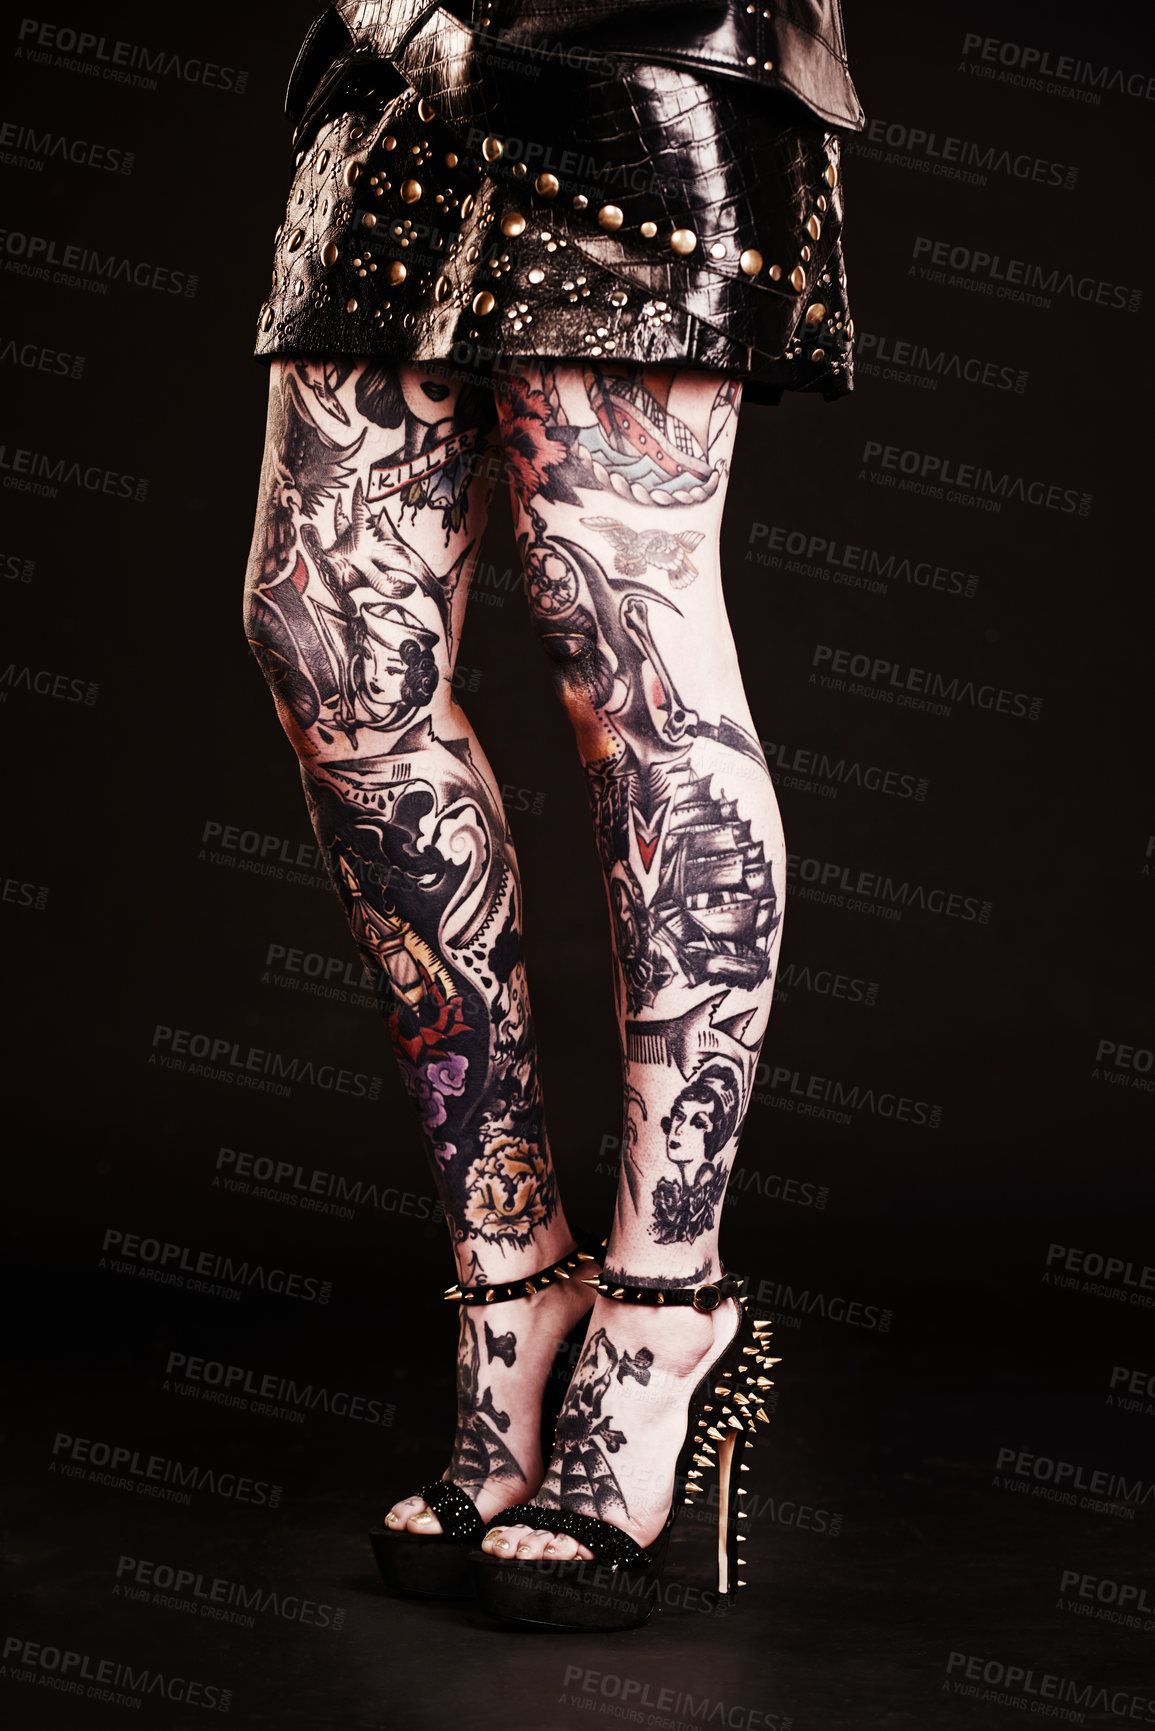 Buy stock photo Studio shot of a woman's tattooed legs